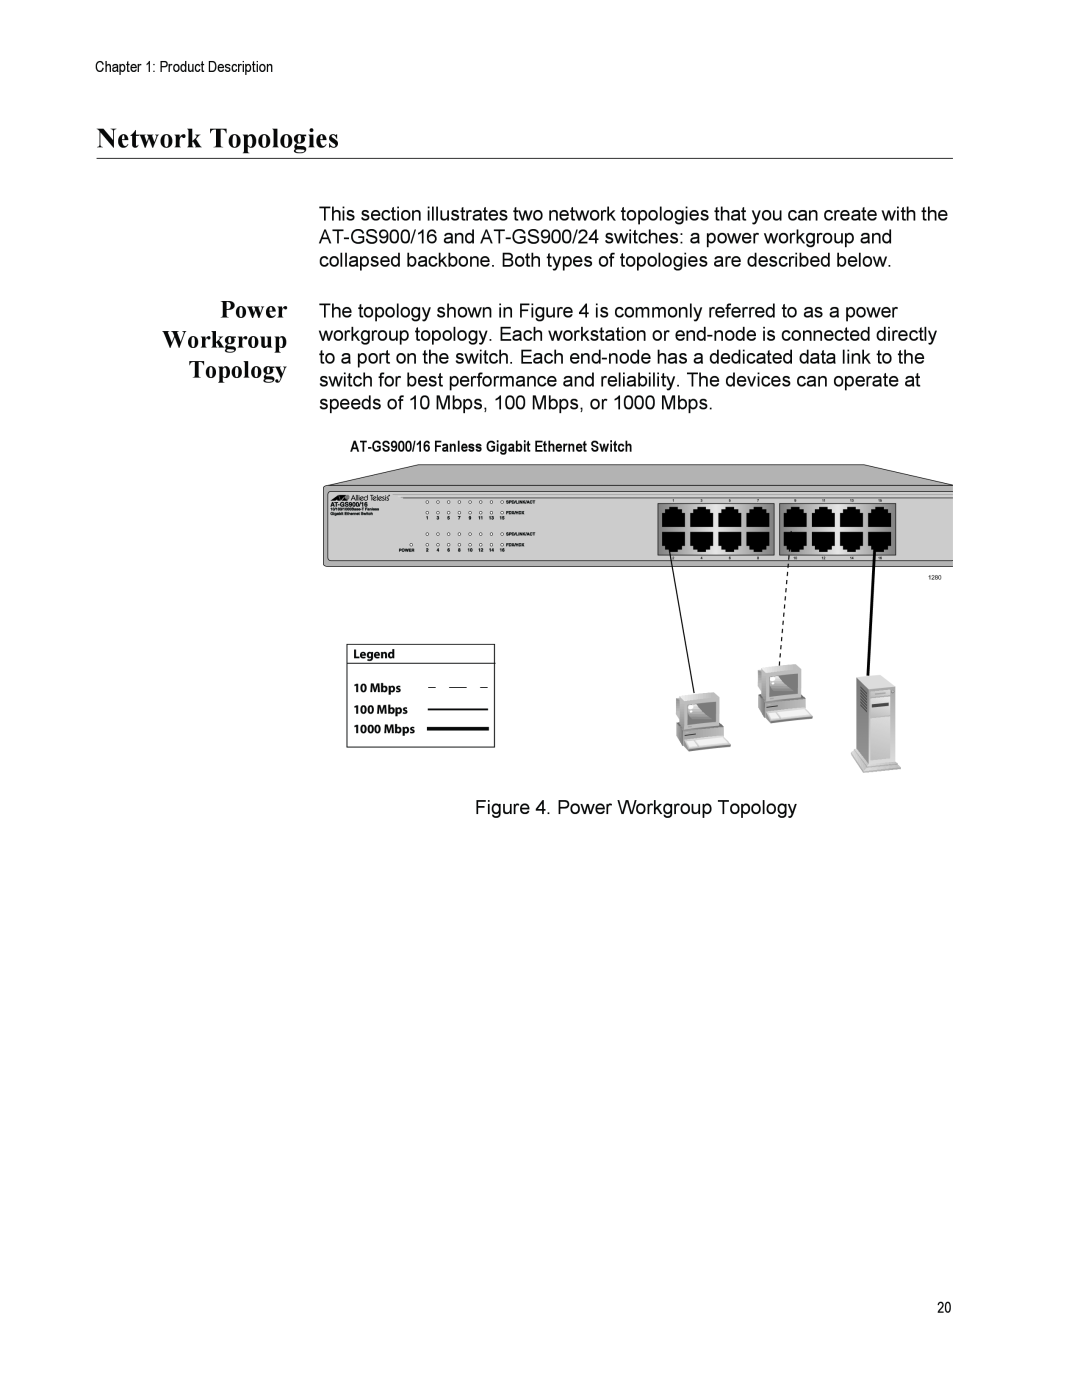 Allied Telesis GS900/5E manual Network Topologies, Power Workgroup Topology 